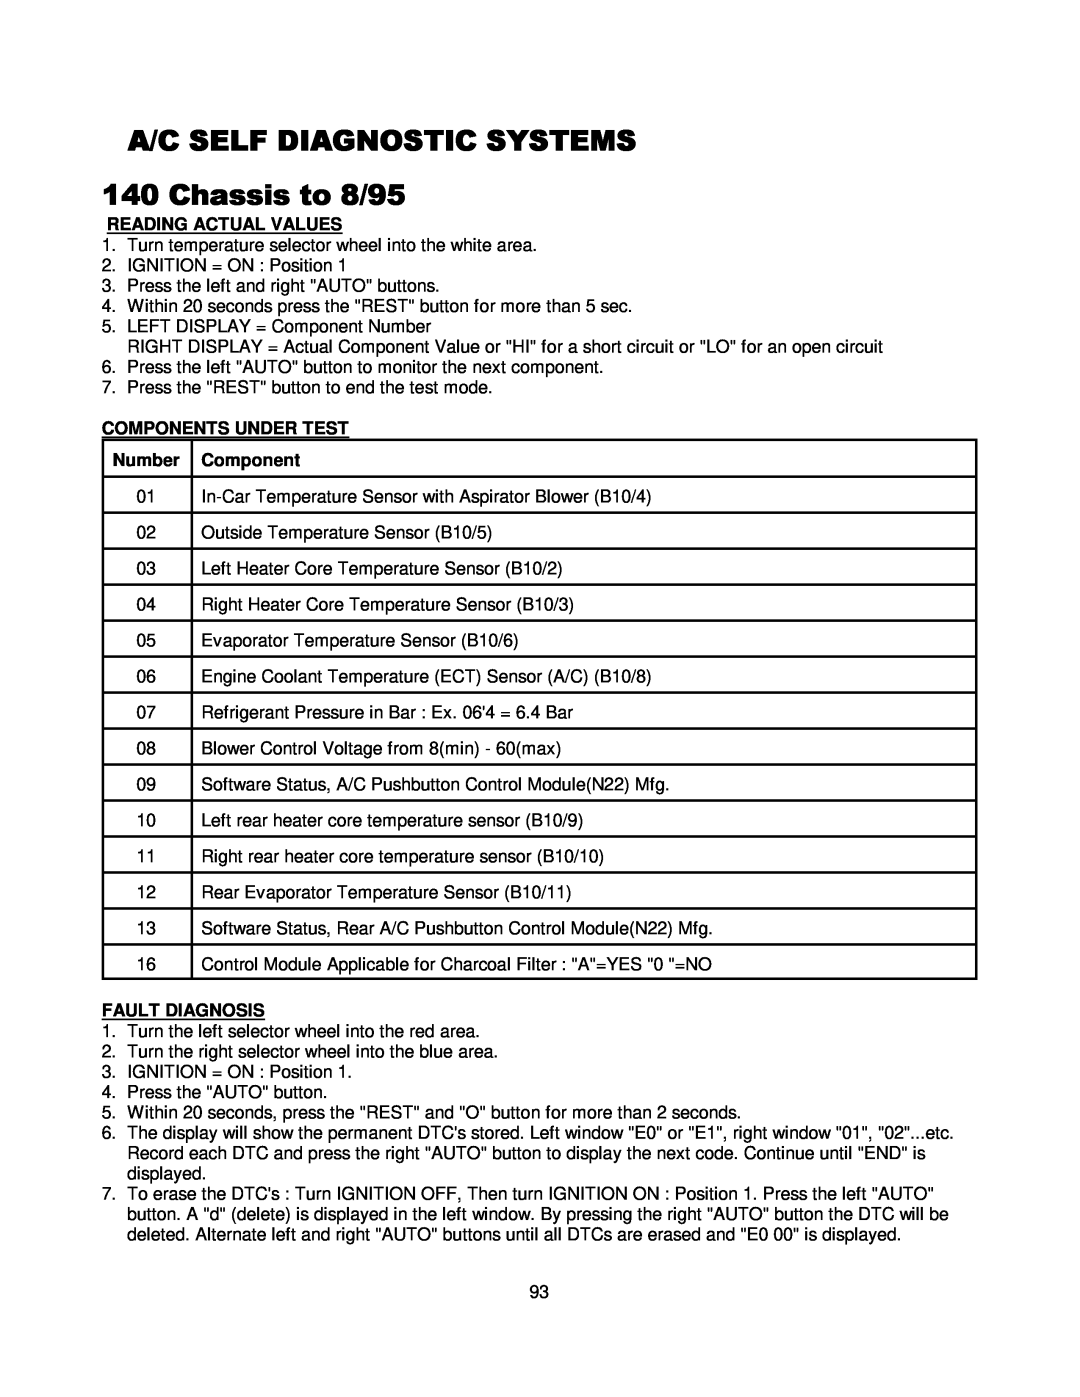 Mercedes-Benz CS1000 manual 6-+!2879, Reading Actual Values, Components Under Test, Number, Fault Diagnosis 